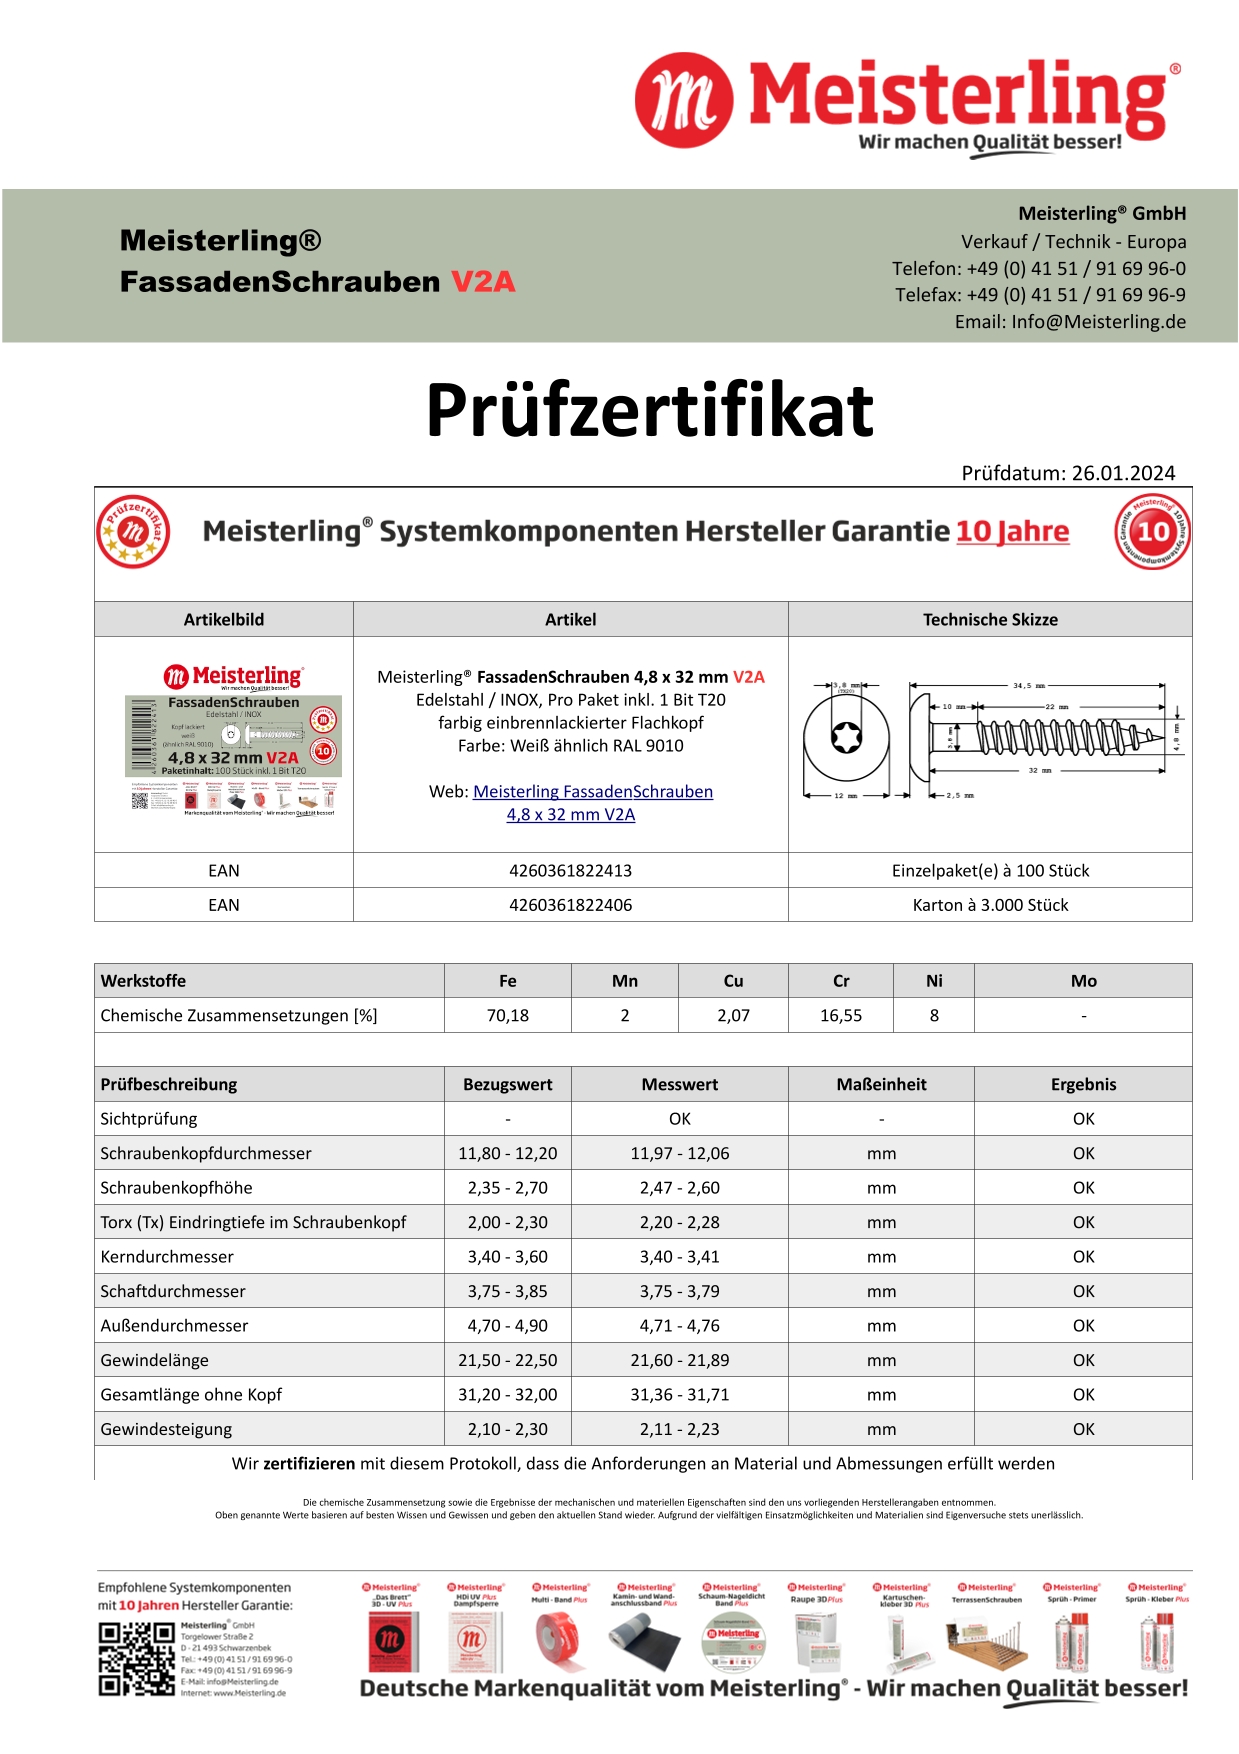 Prüfzertifikat Meisterling® FassadenSchrauben 4,8 x 32 mm V2a weiß